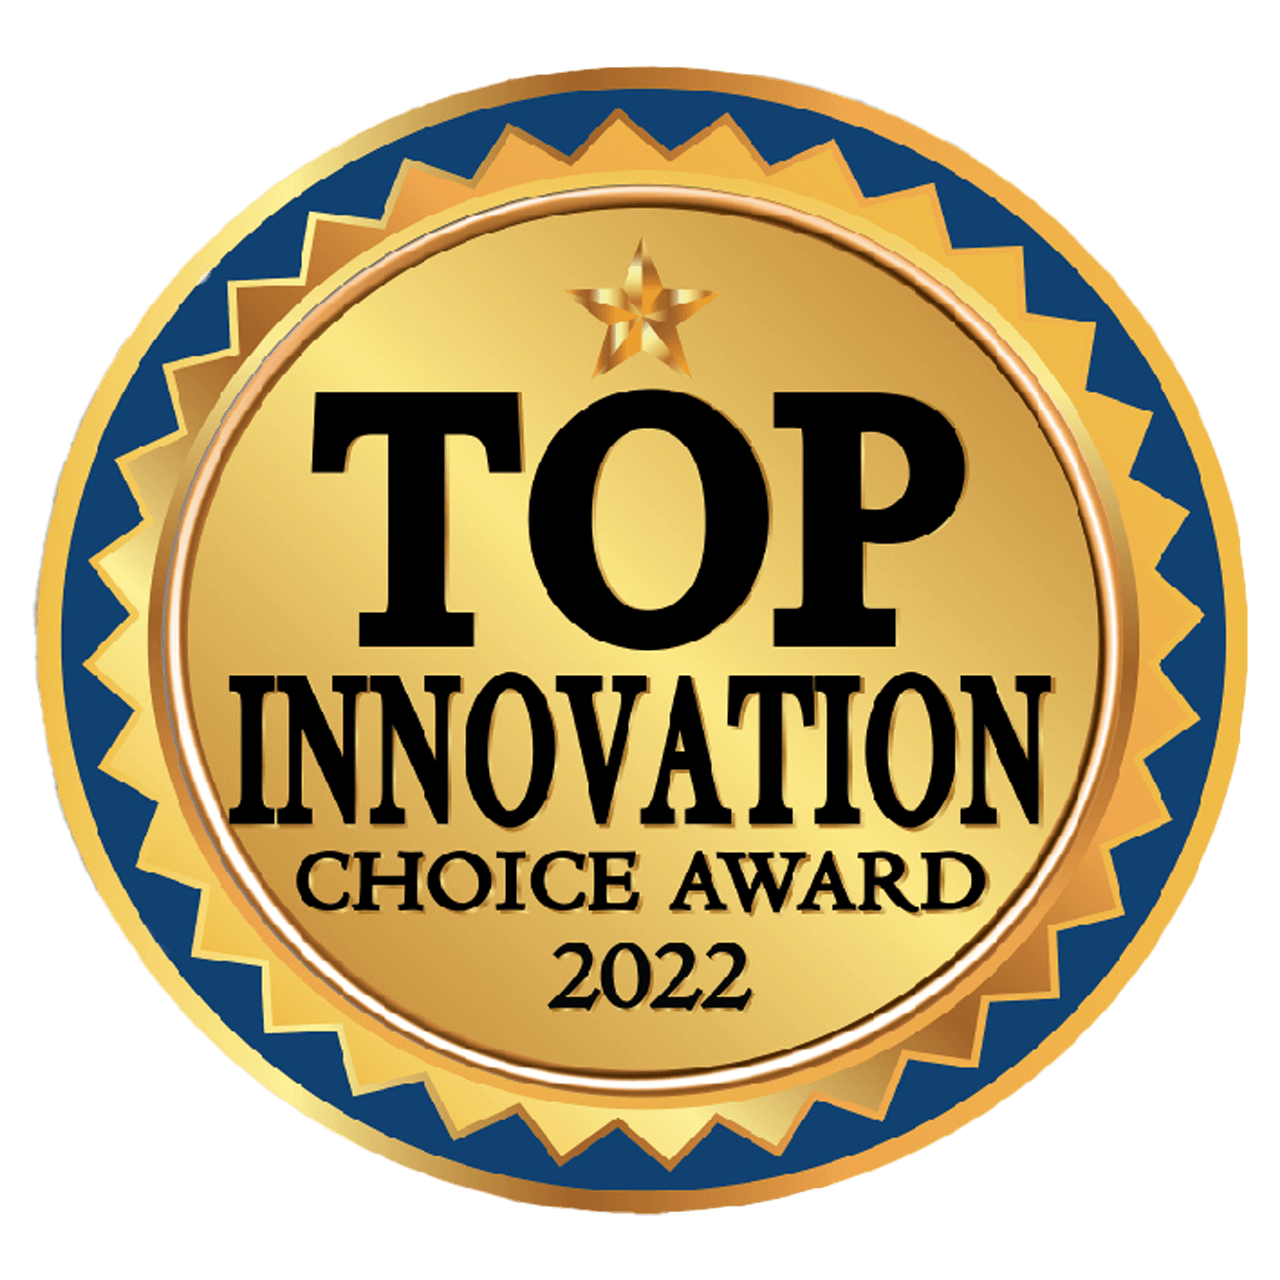 Top Innovation Choice Award 2022 Makuku Air Diapers